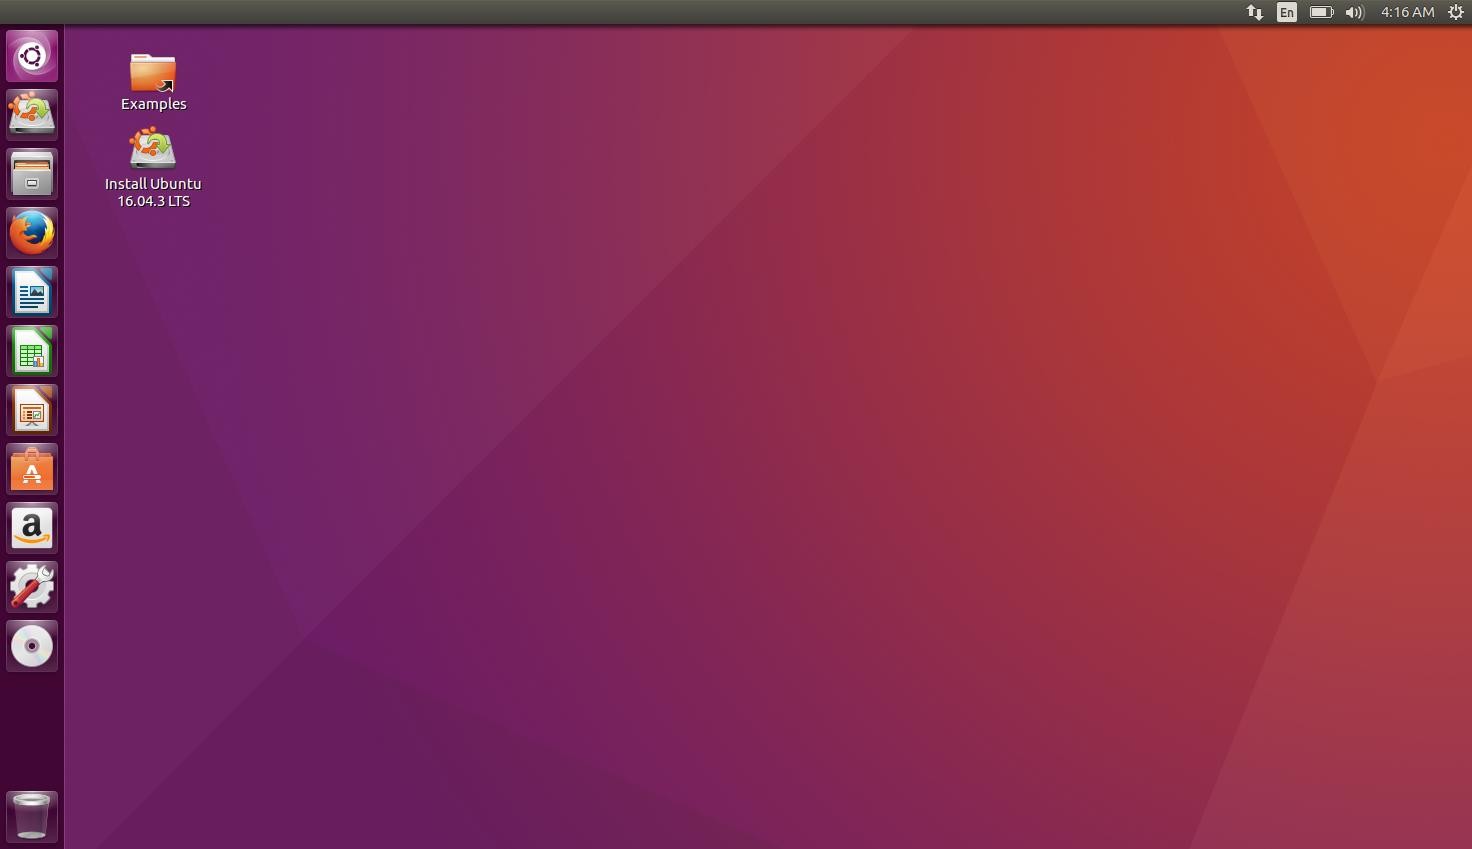 Ubuntu 16.04.3 LTS